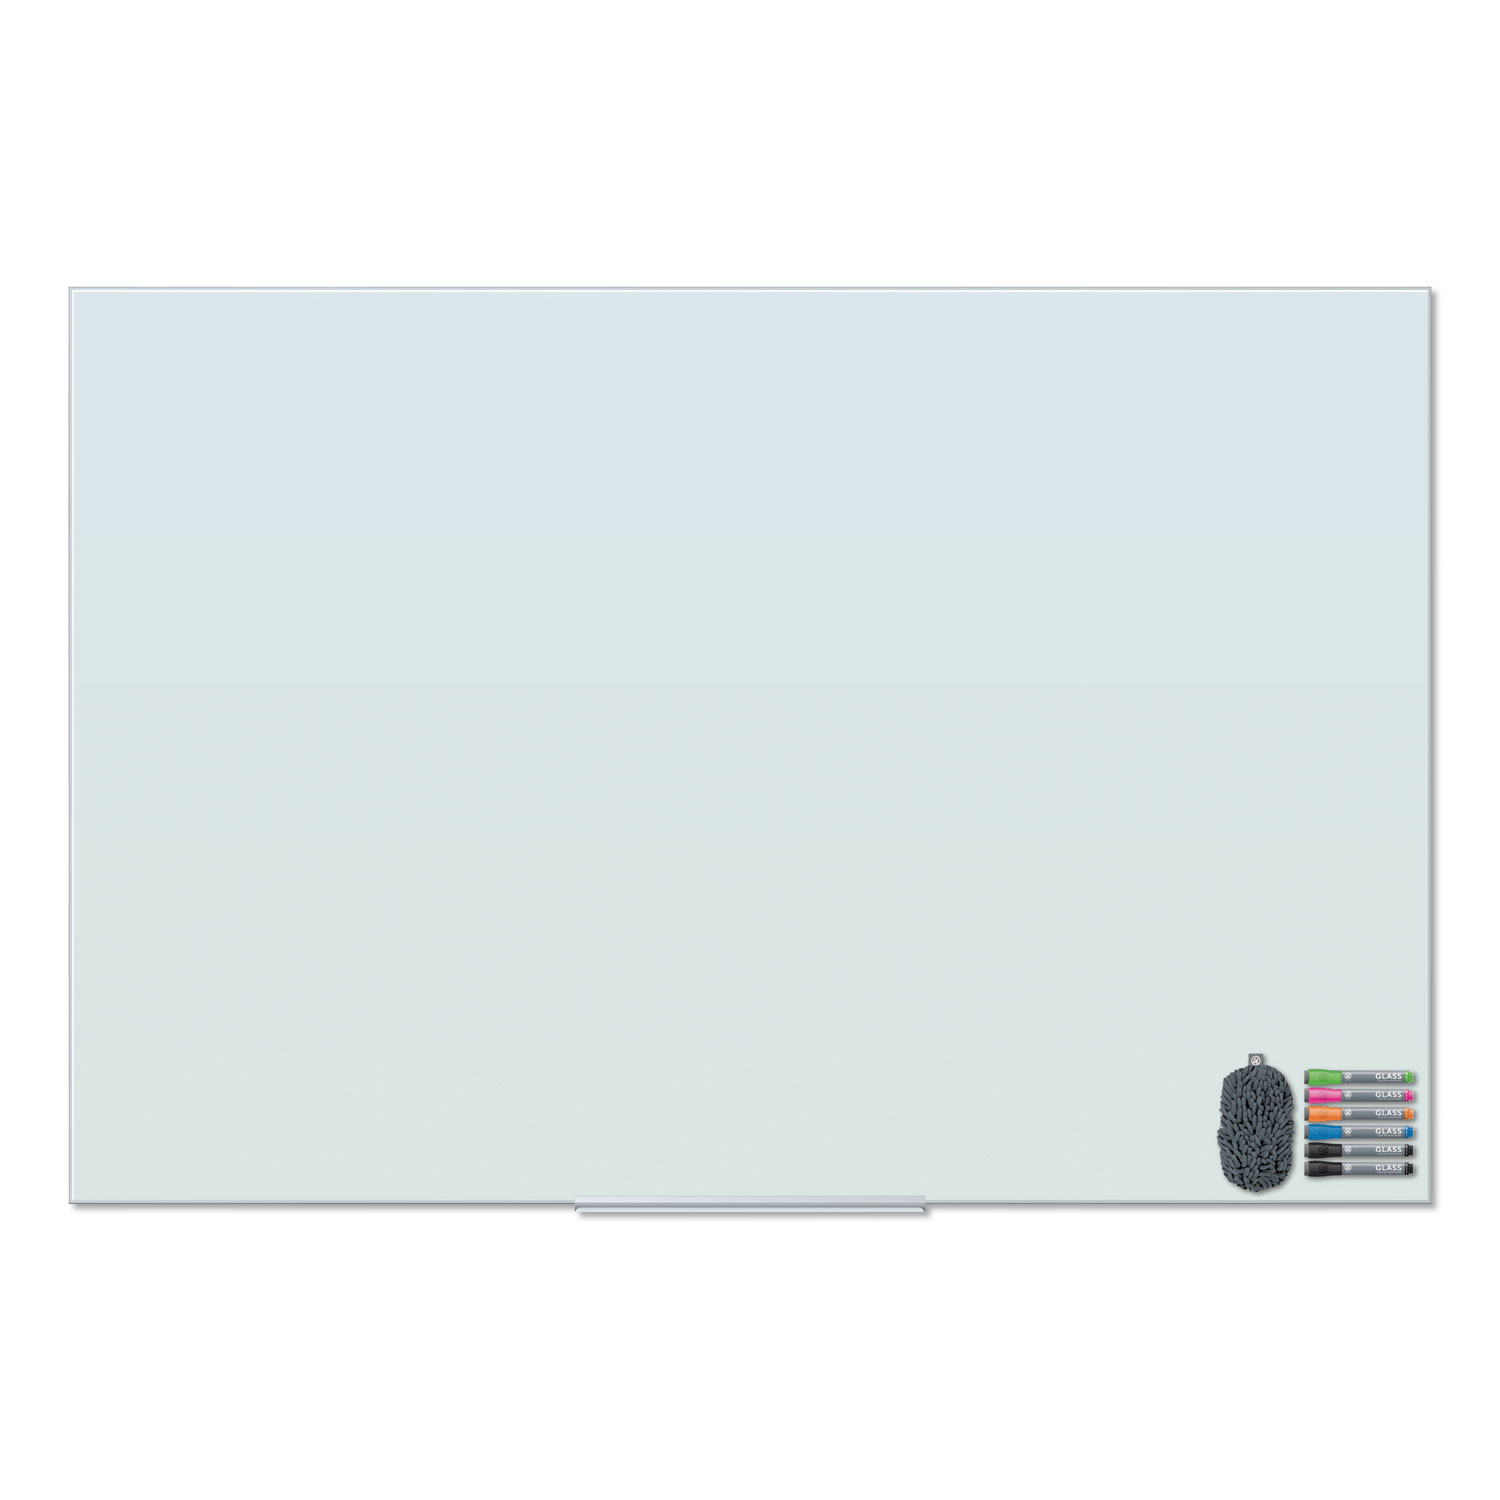  U Brands 3979U00-01 Floating Glass Dry Erase Board, 72 x 48, White (UBR3979U0001) 